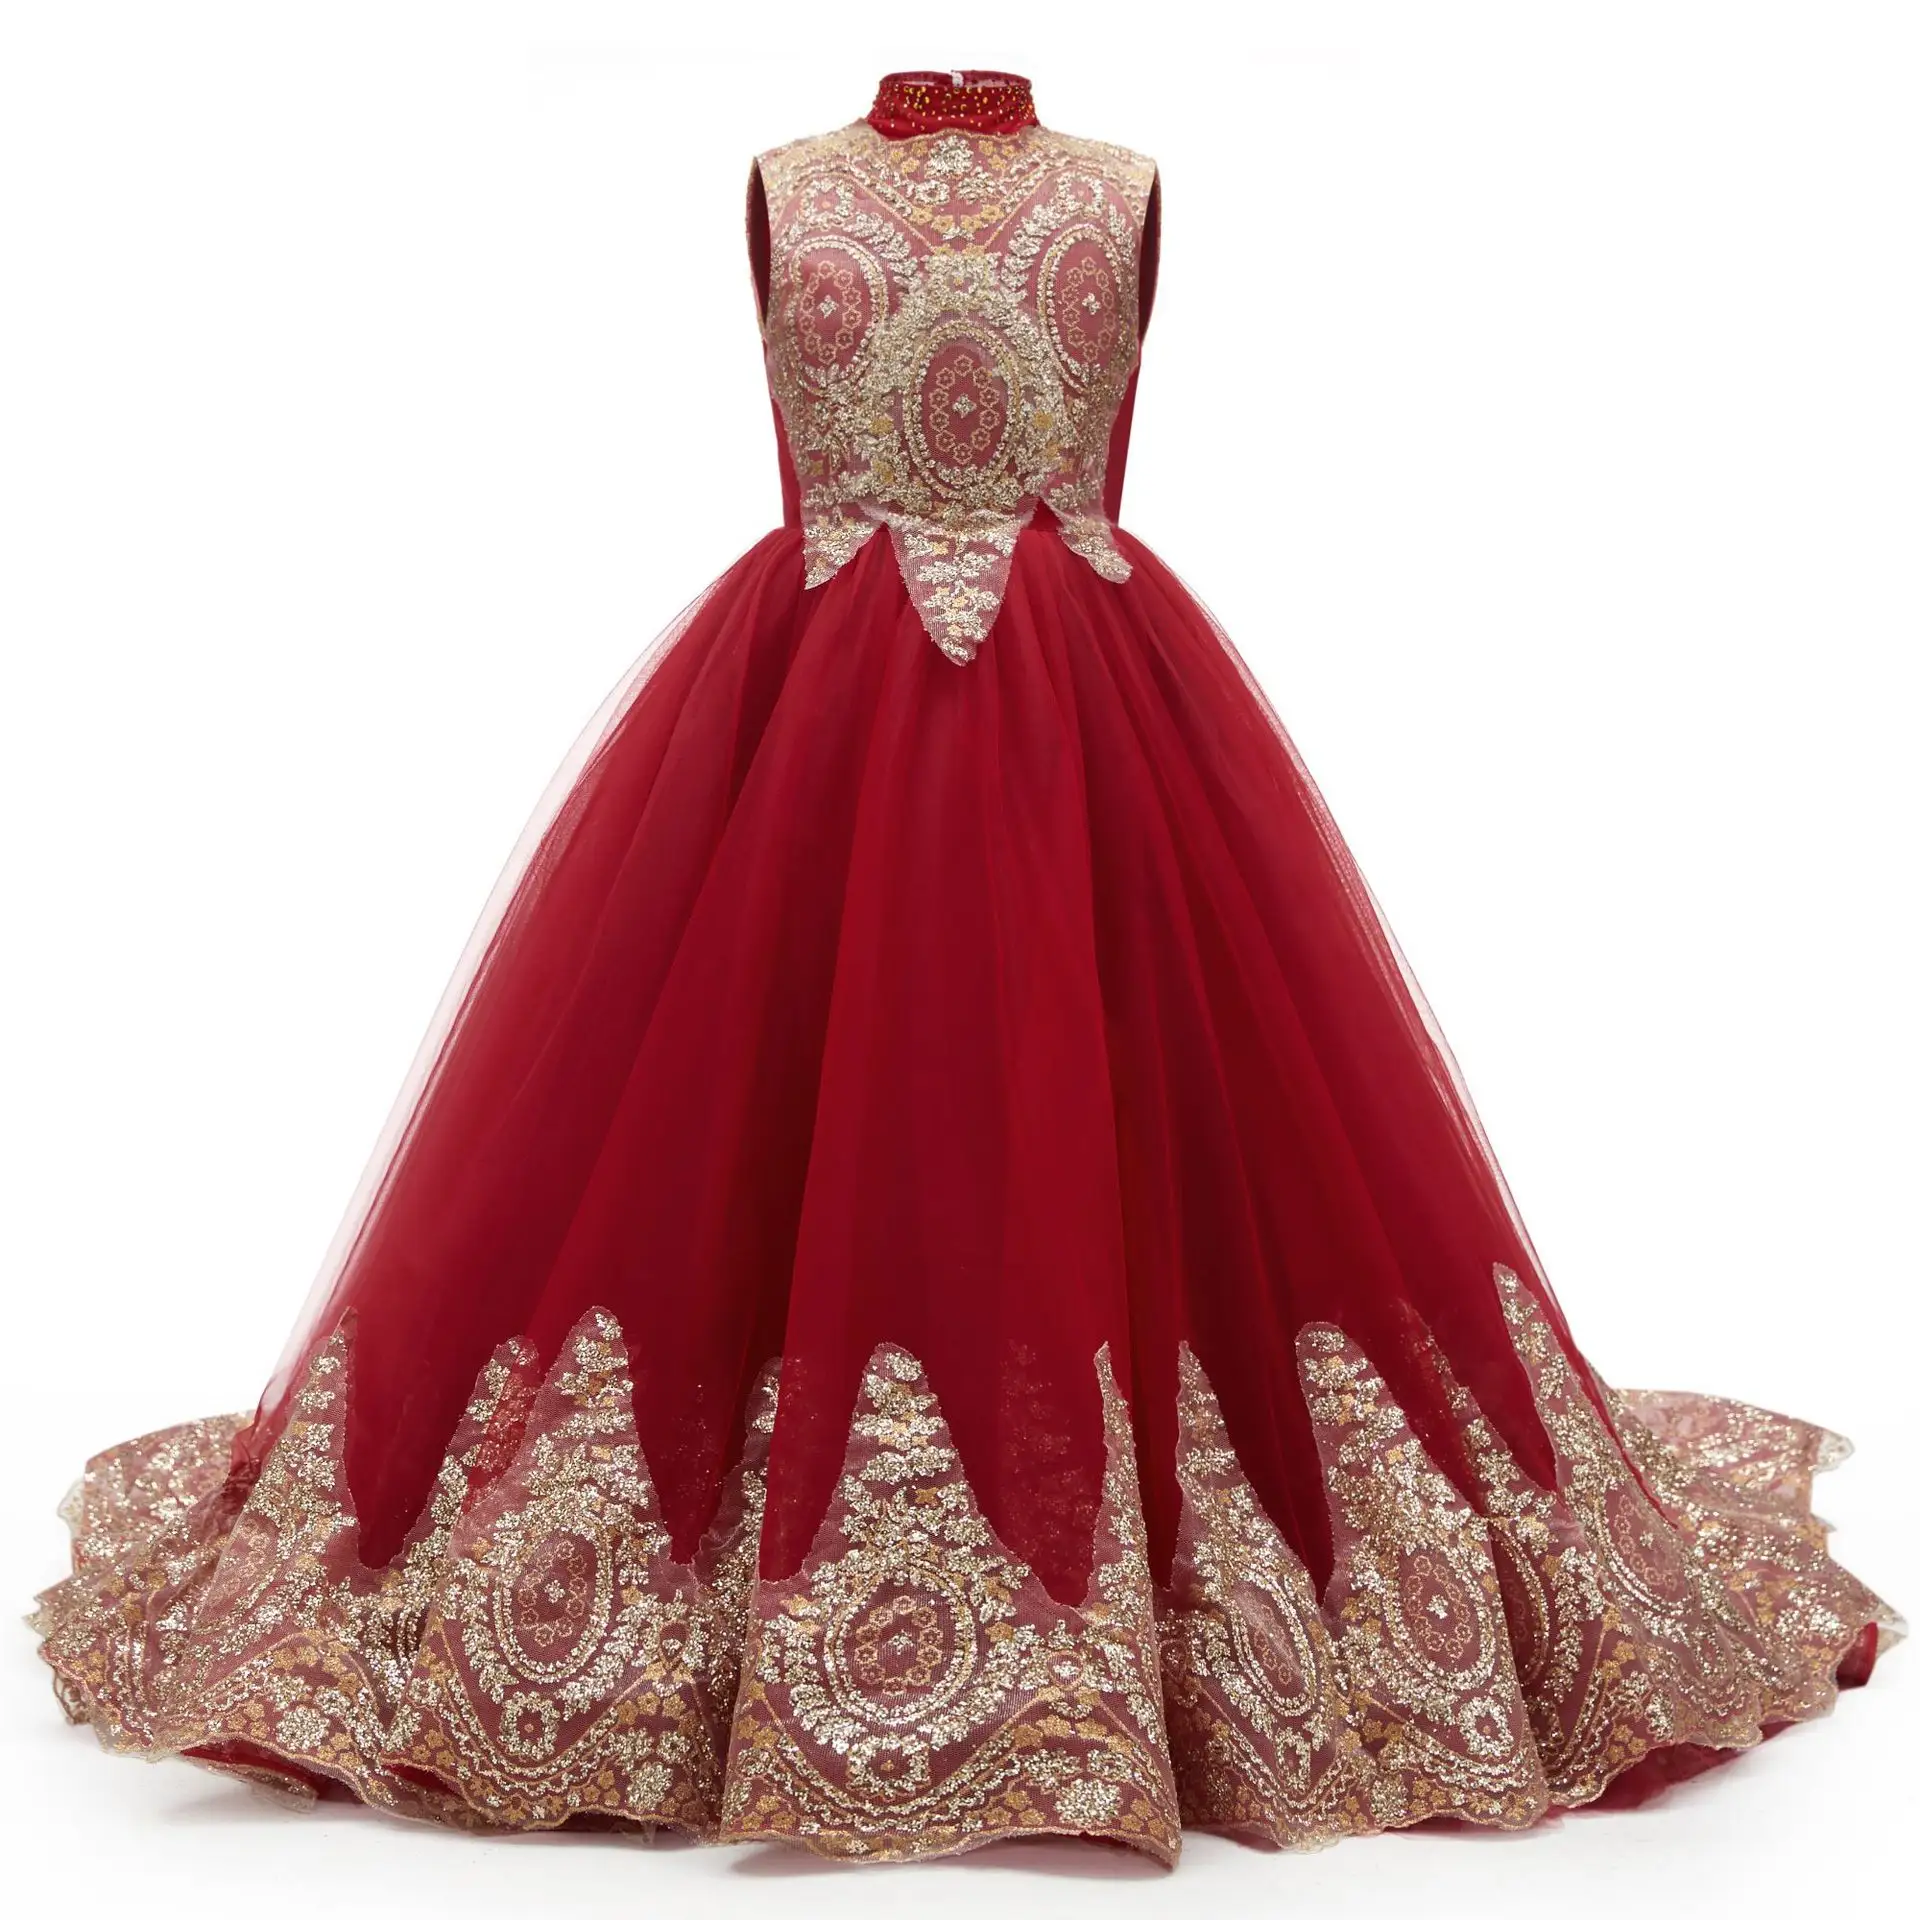 Vestido de noiva elegante para meninas, vestido vermelho de banquete elegante, moda de noite para meninas grandes de 10 anos